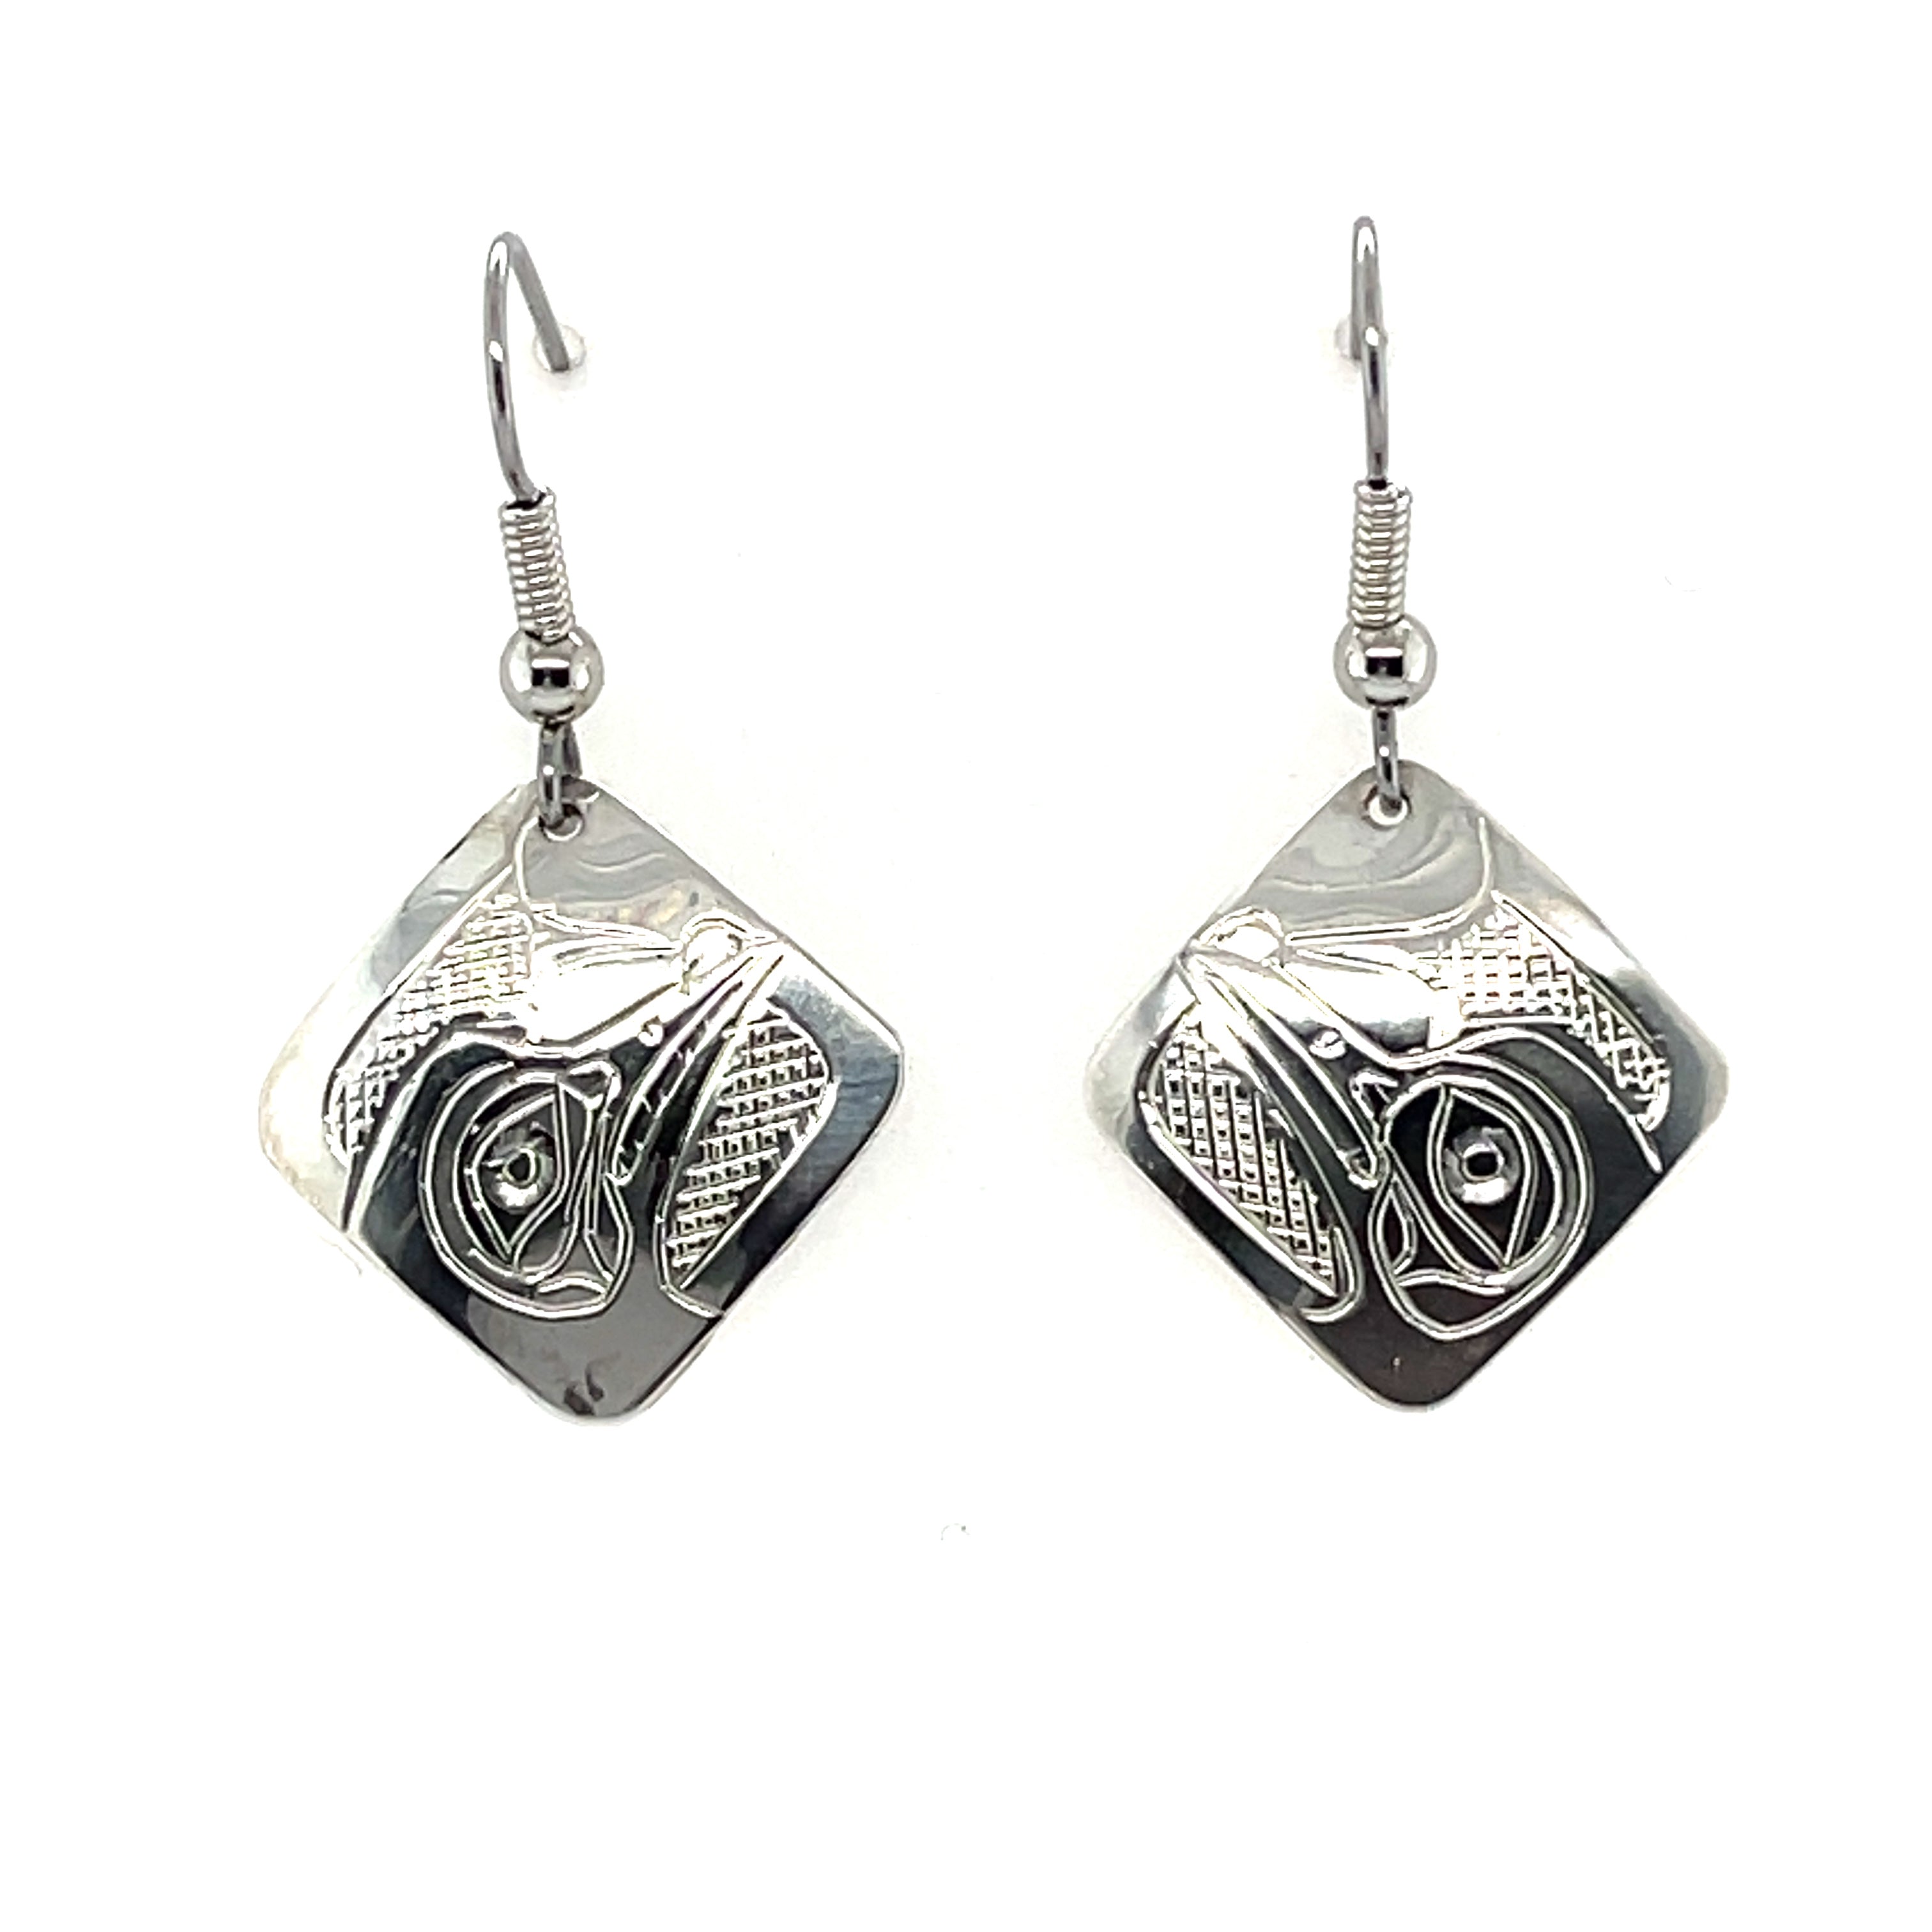 Earrings - Sterling Silver - Diamond - Hummingbird